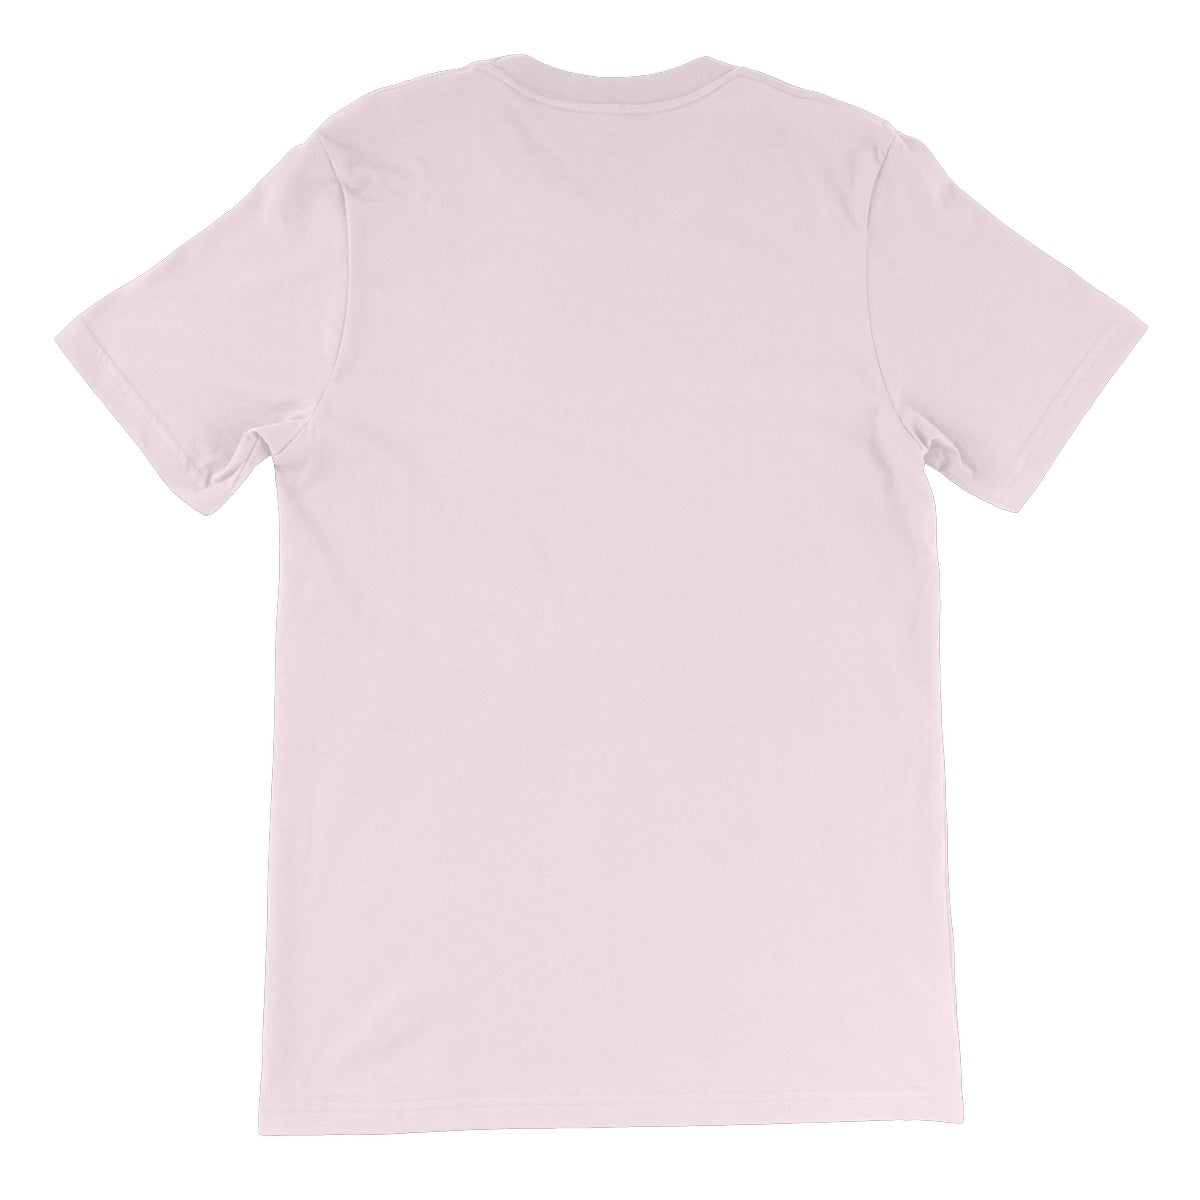 Complex Circle, 2 Slits Unisex Short Sleeve T-Shirt